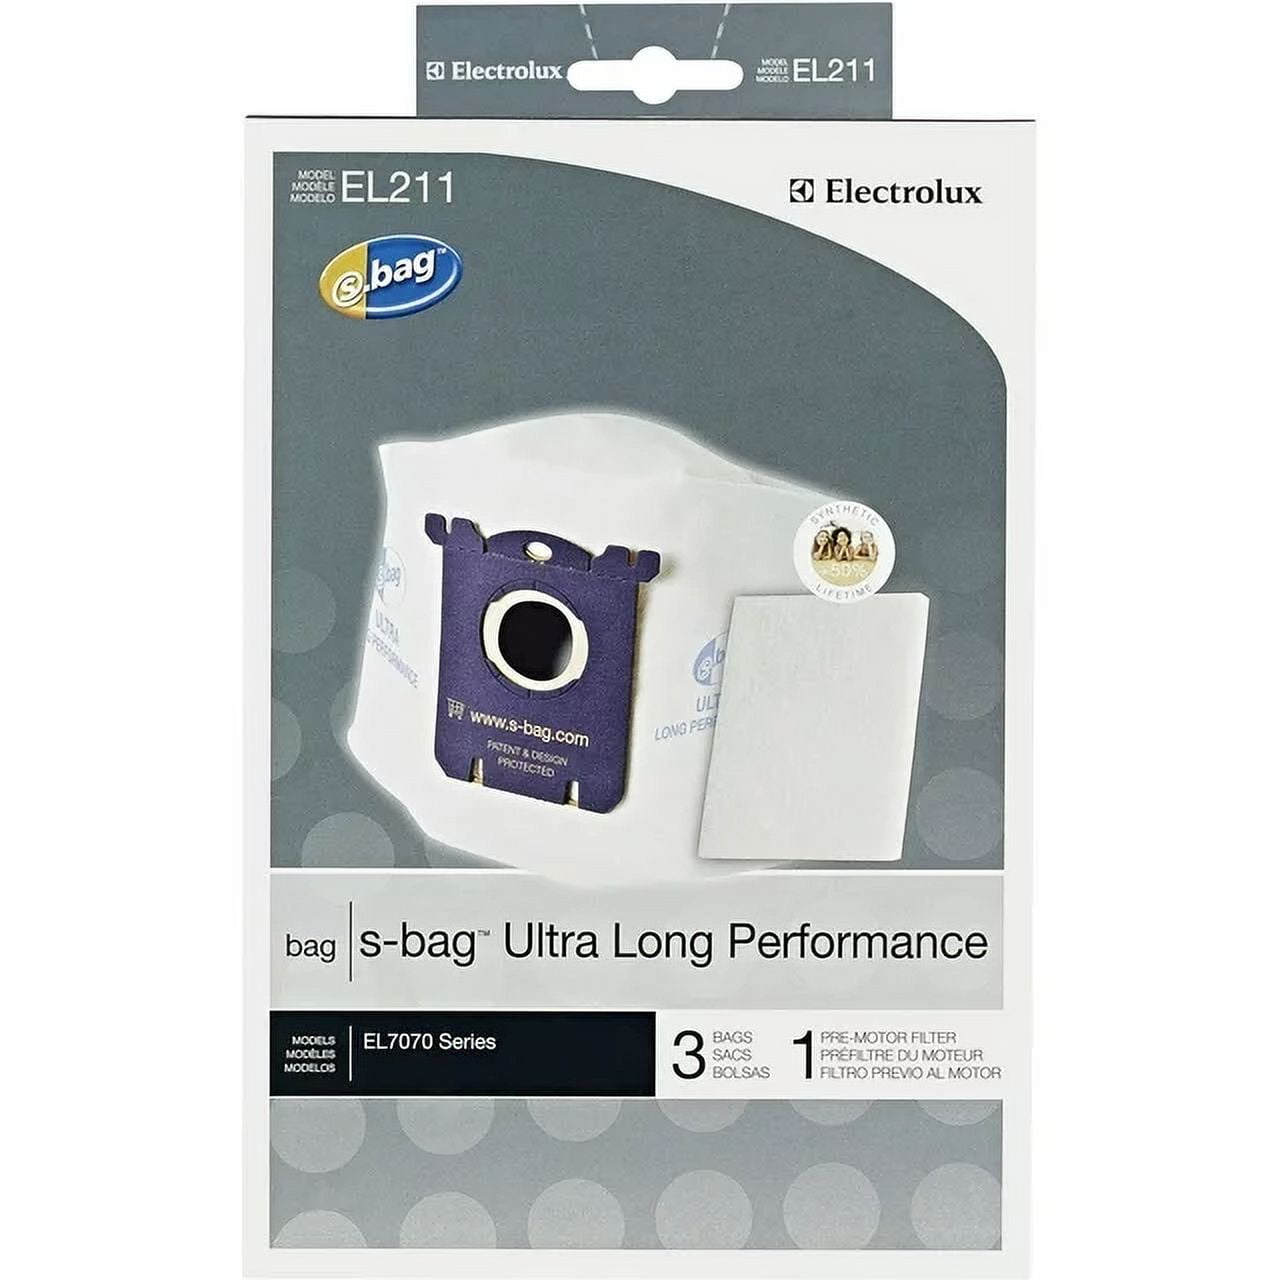  Genuine Electrolux Ultra Long Performance s-bag EL211 - 3 bags  - Household Vacuum Bags Upright